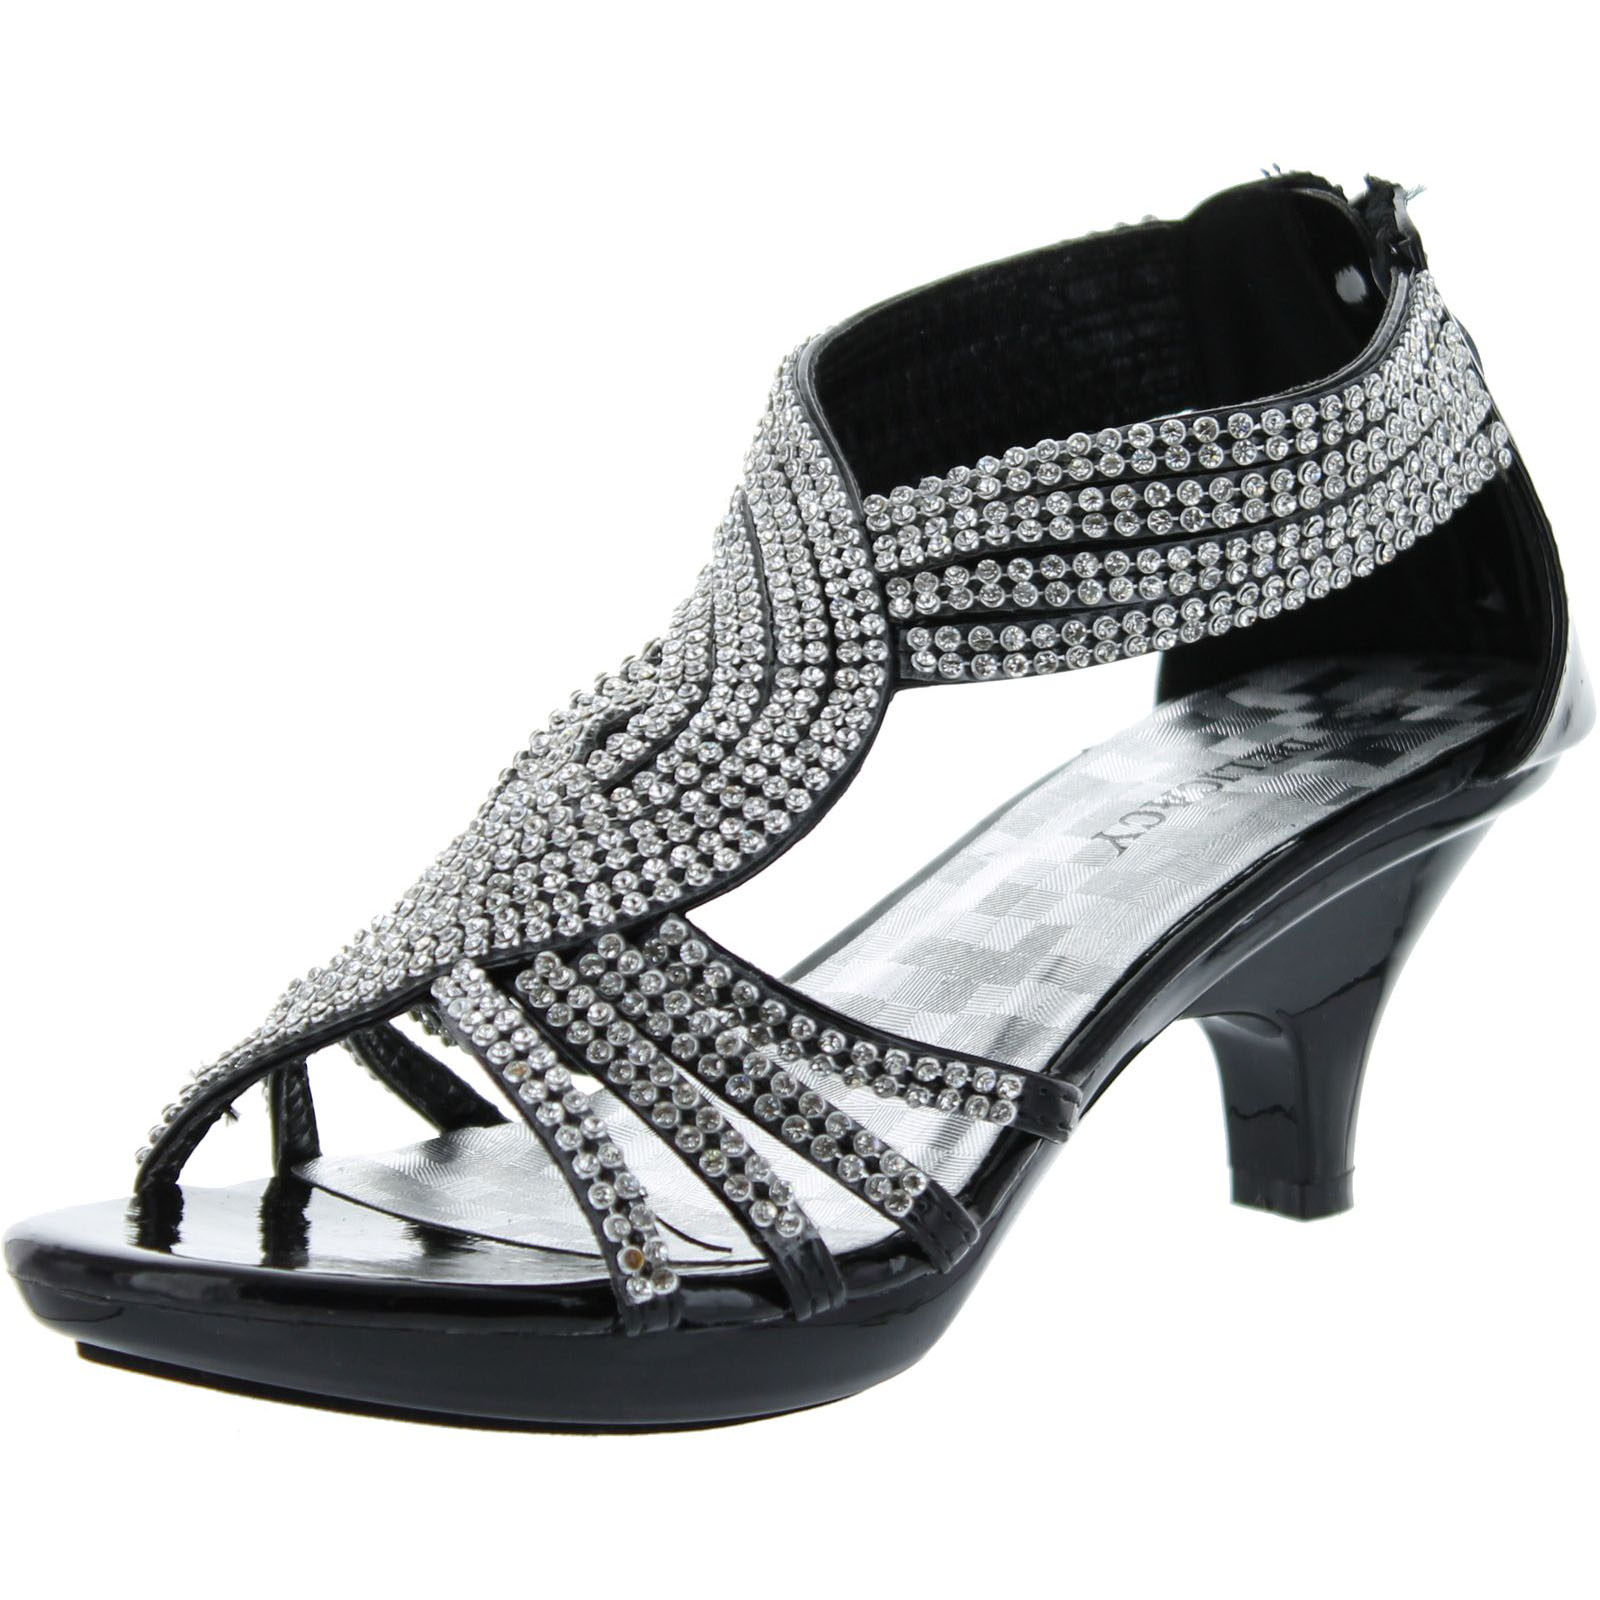 Static Footwear Delicacy Womens Angel-37 Strappy Rhinestone Dress Sandal Low Heel Shoes